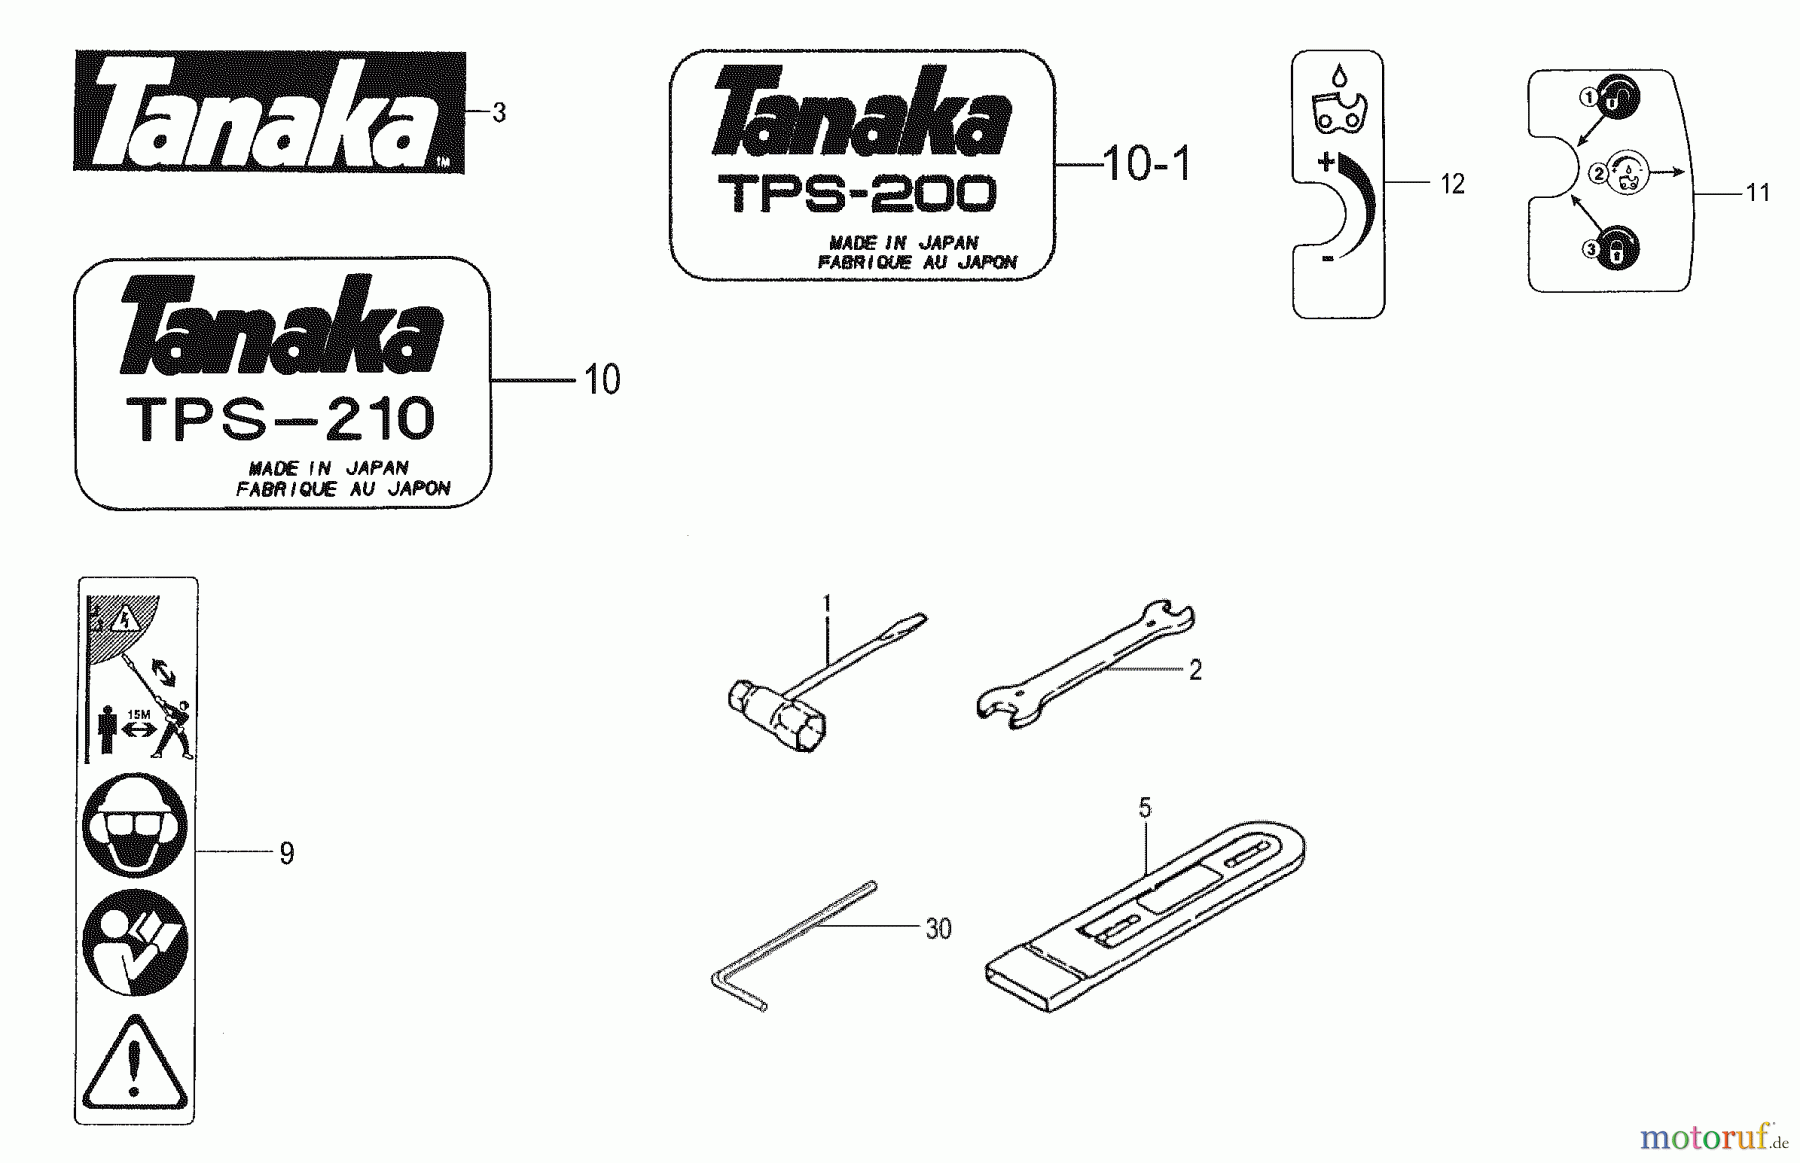  Tanaka Zubehör TPS-210 - Tanaka Pole Saw Attachment Tools & Decals